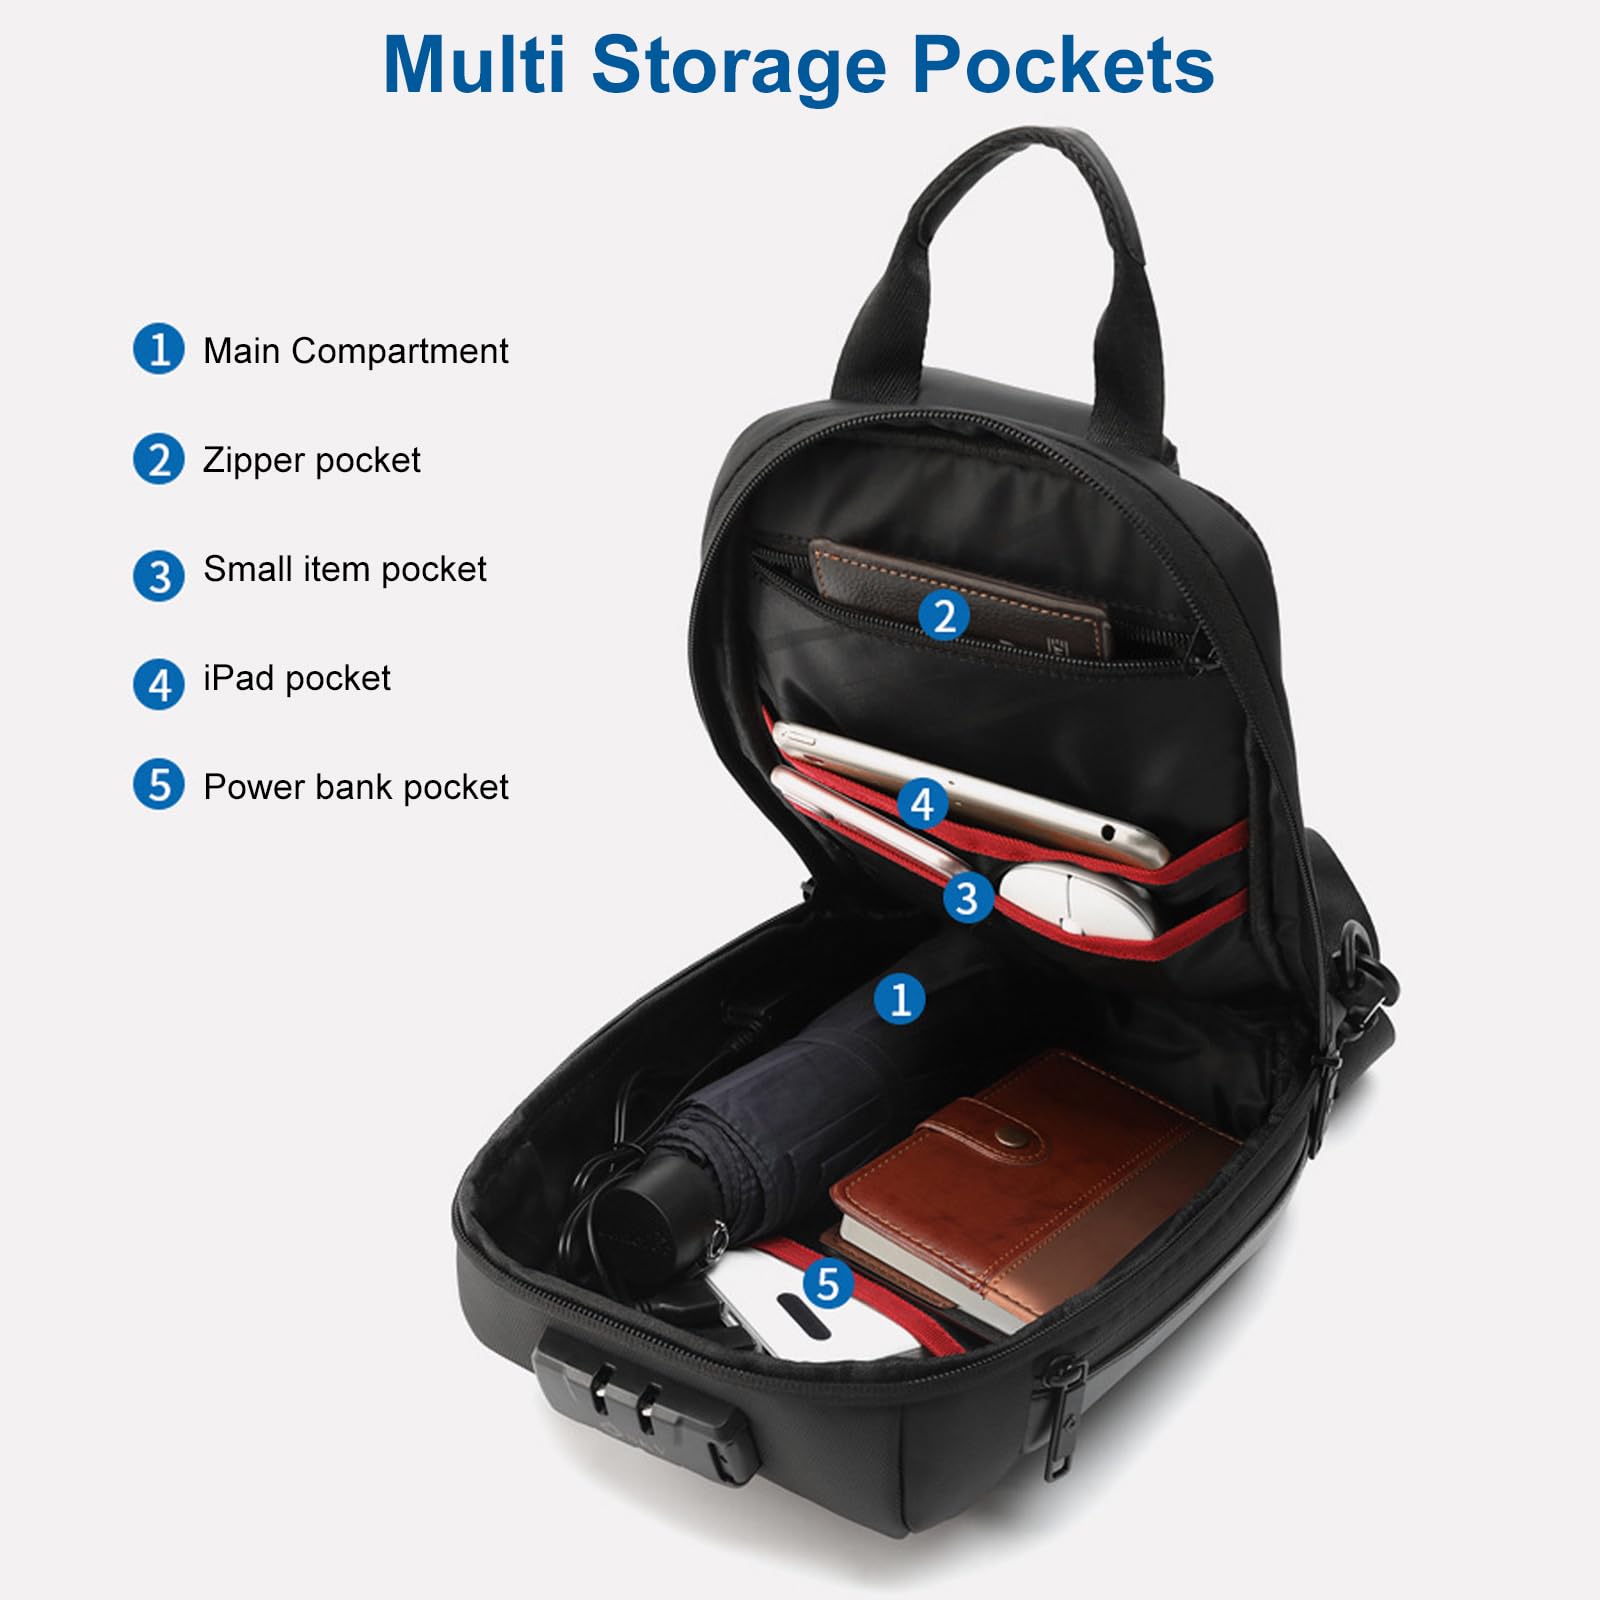 VALUEQLO Anti Theft Sling Bag, Waterproof Sling Crossbody Backpack Chest Bag with USB Charging Port, Casual Daypack Shoulder Bag for Men Women, Black